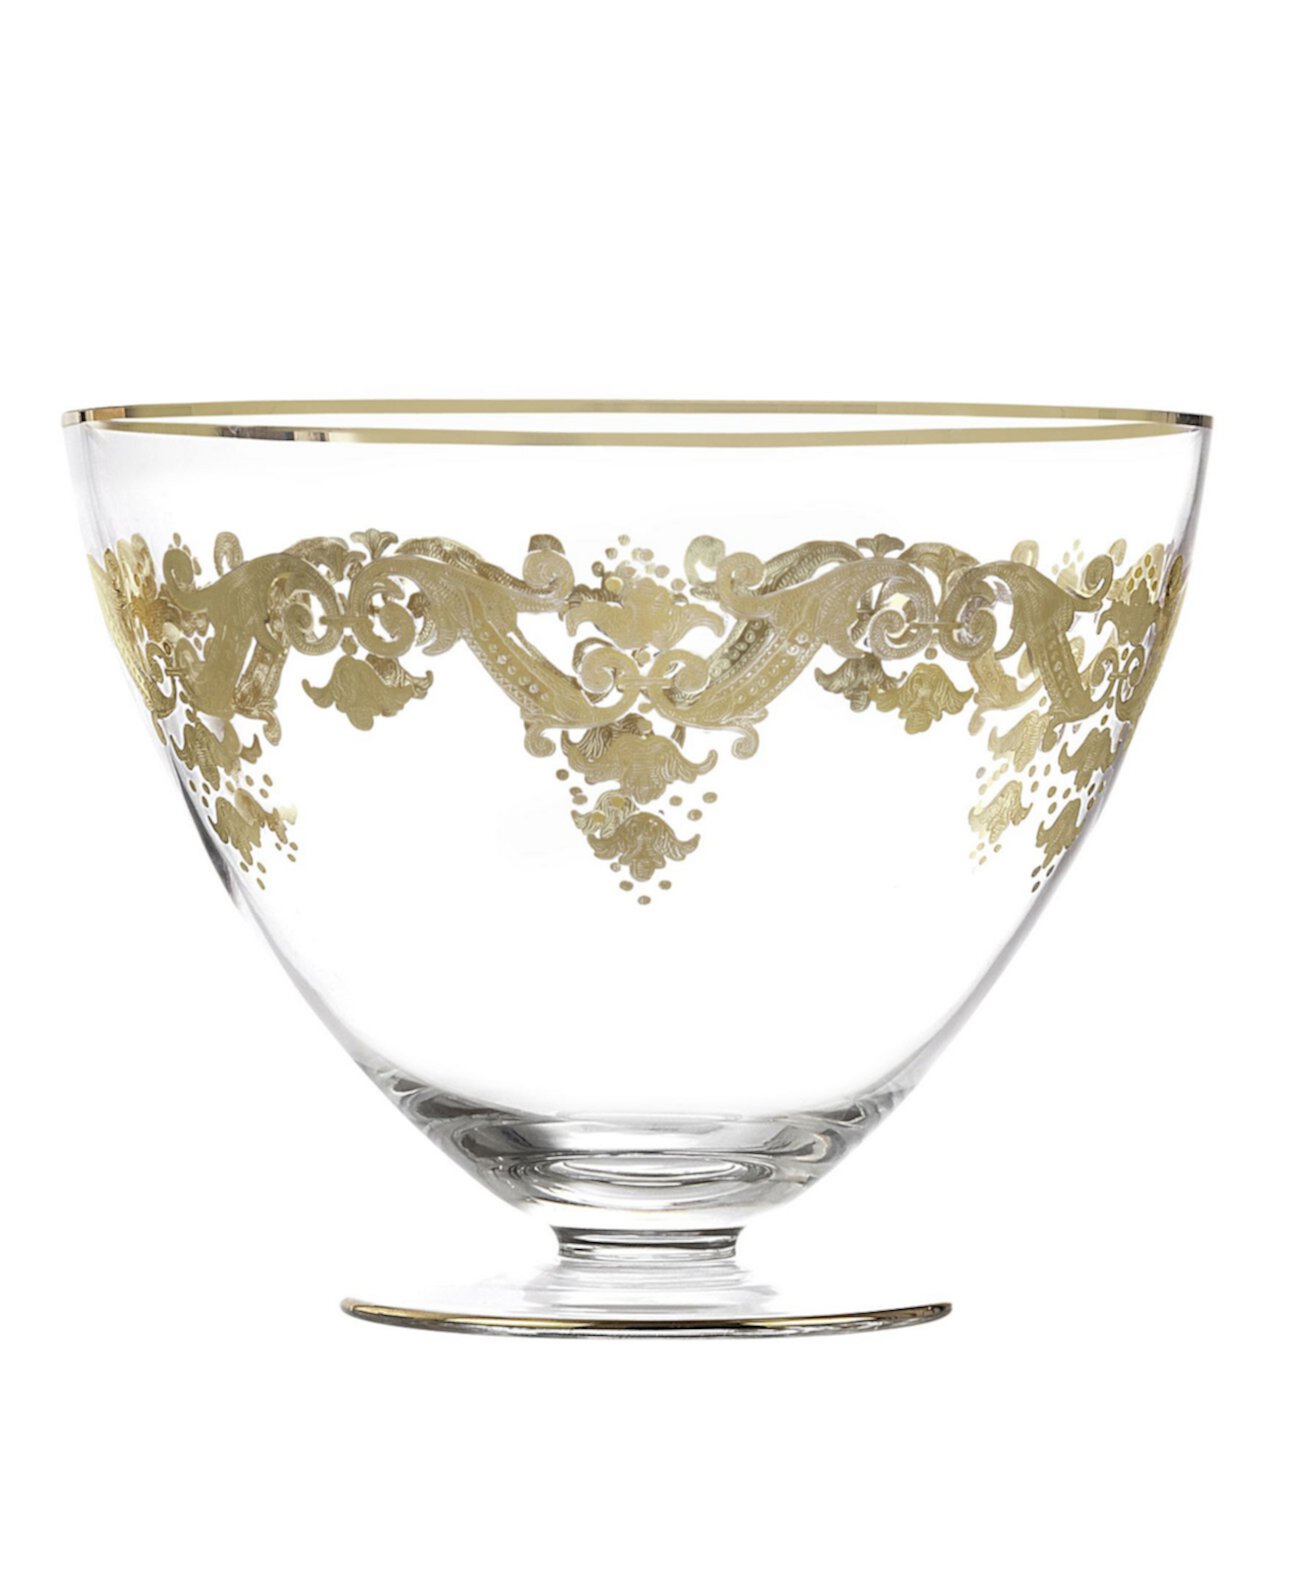 Стеклянная чаша с произведениями искусства из 24-каратного золота Classic Touch